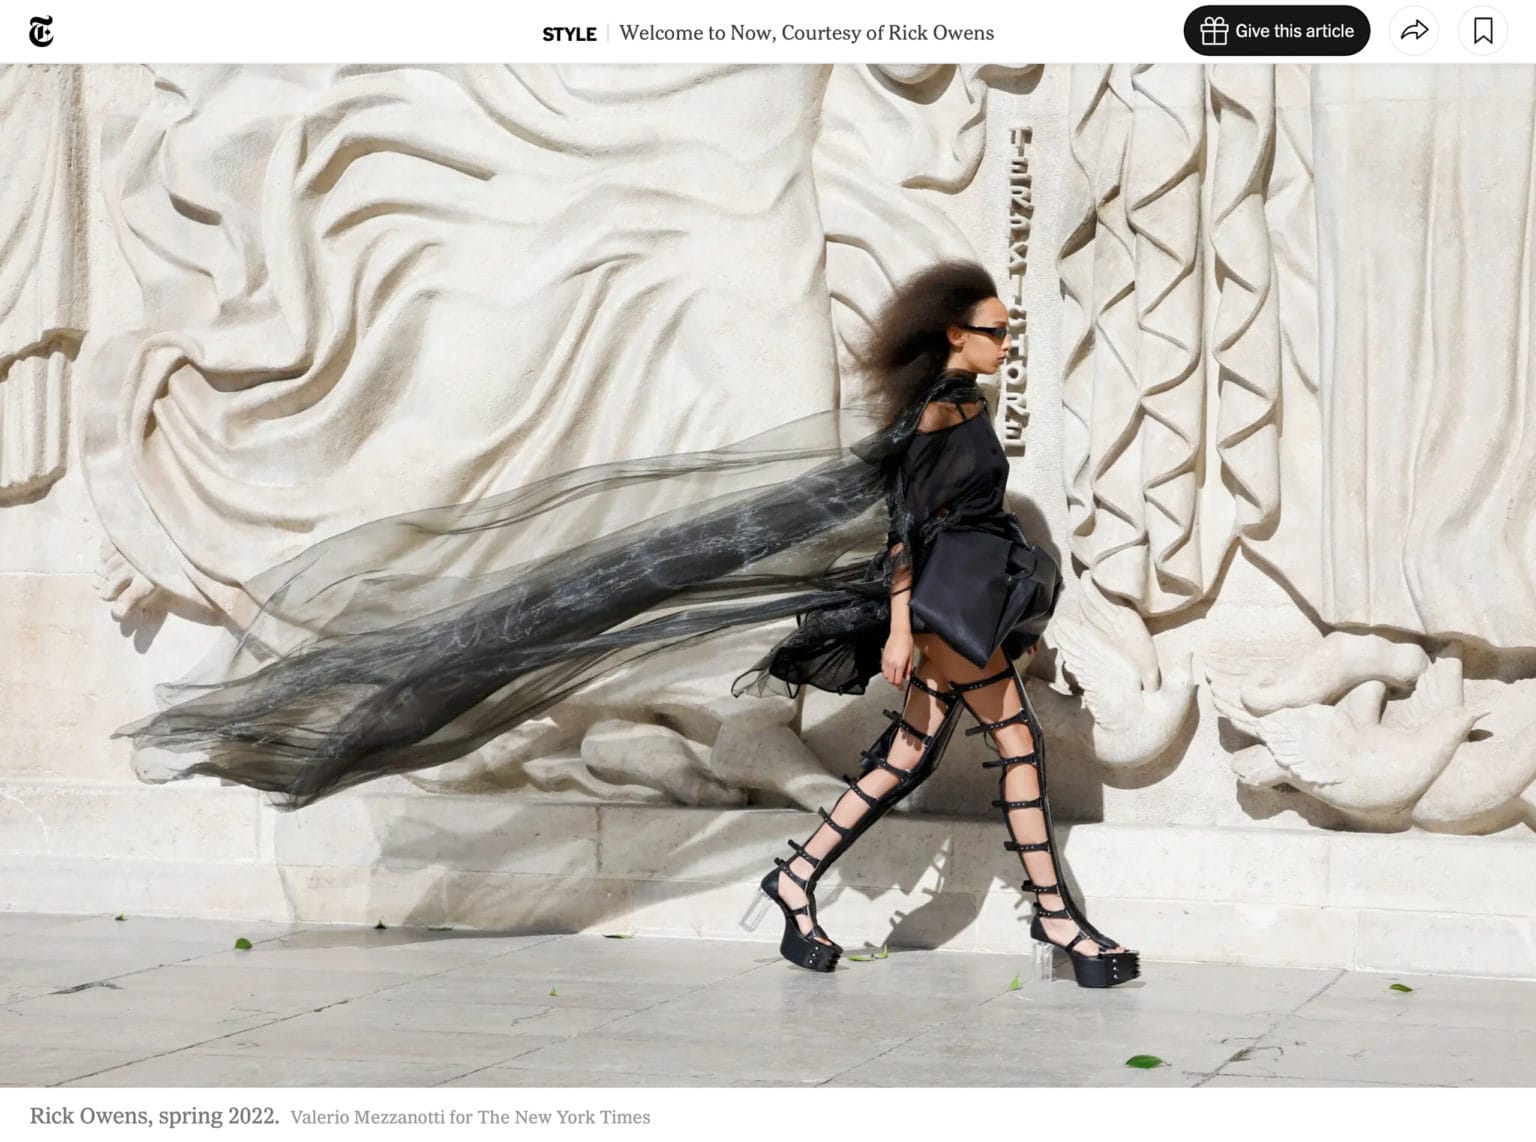 Rick Owens Fashion Show, Photo by Valerio Mezzanotti for The New York Times